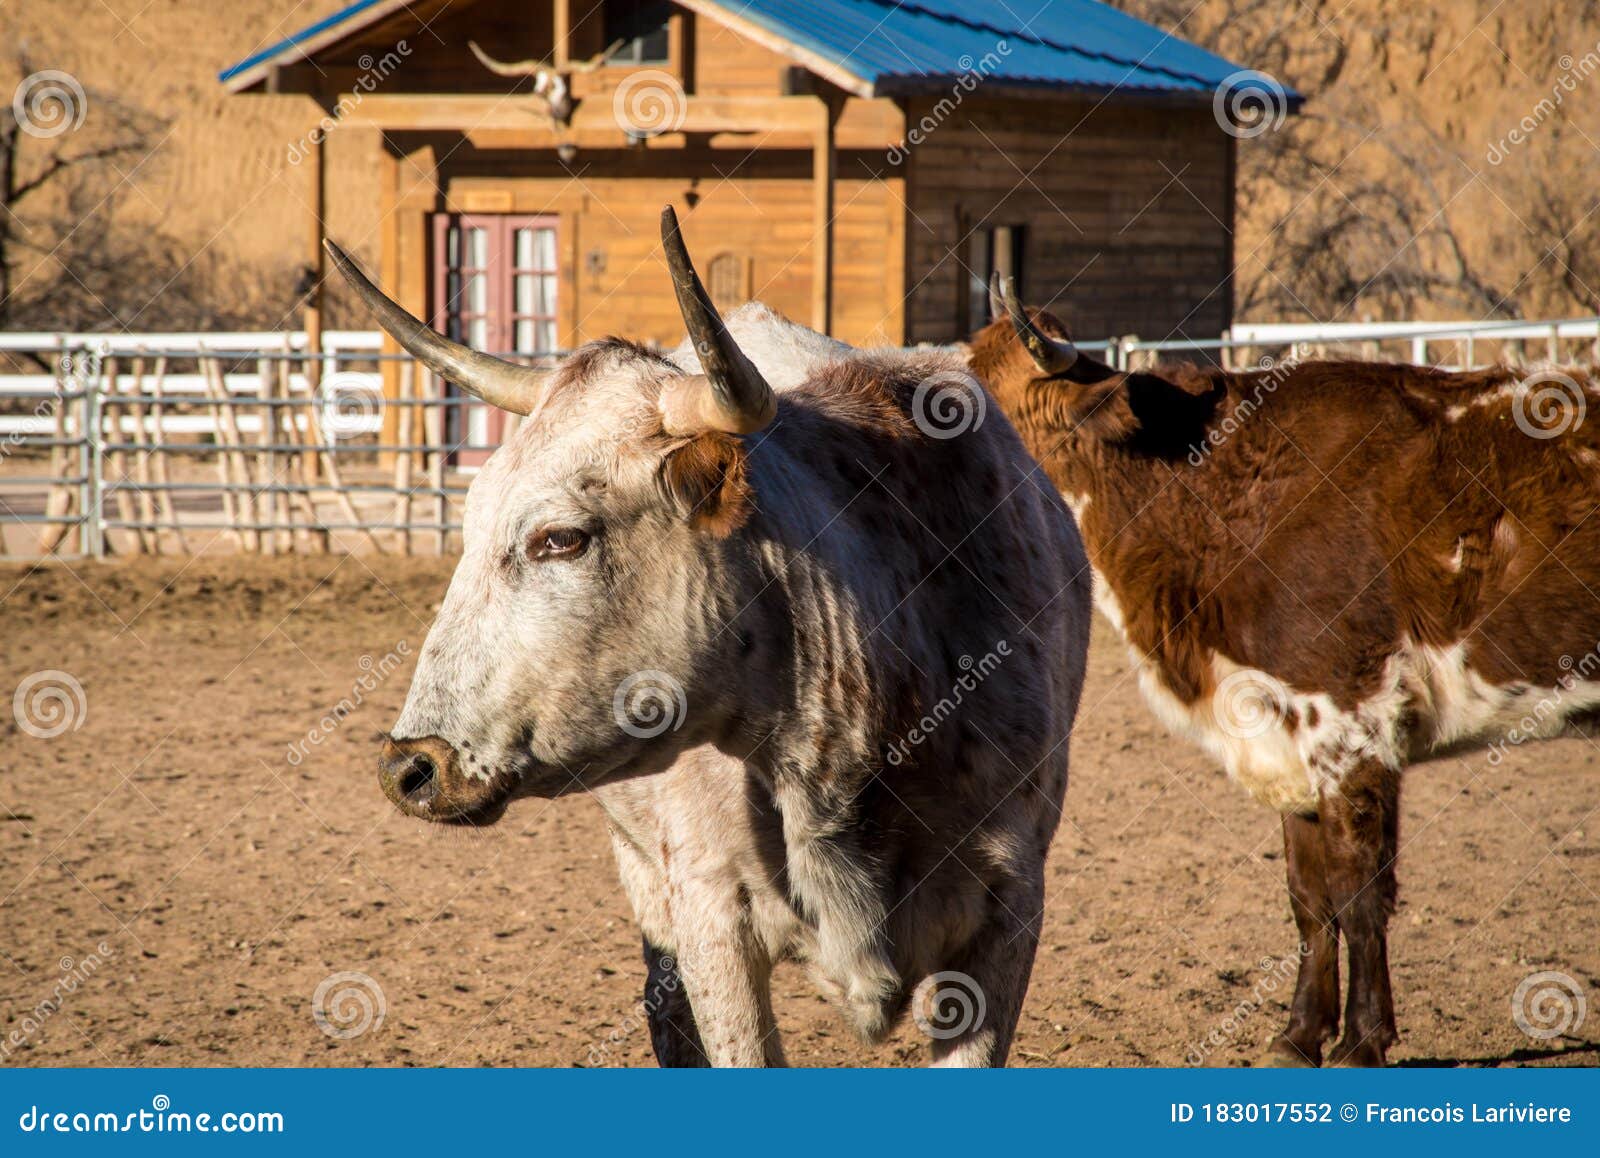 corriente horned beef in a pasture in arizona